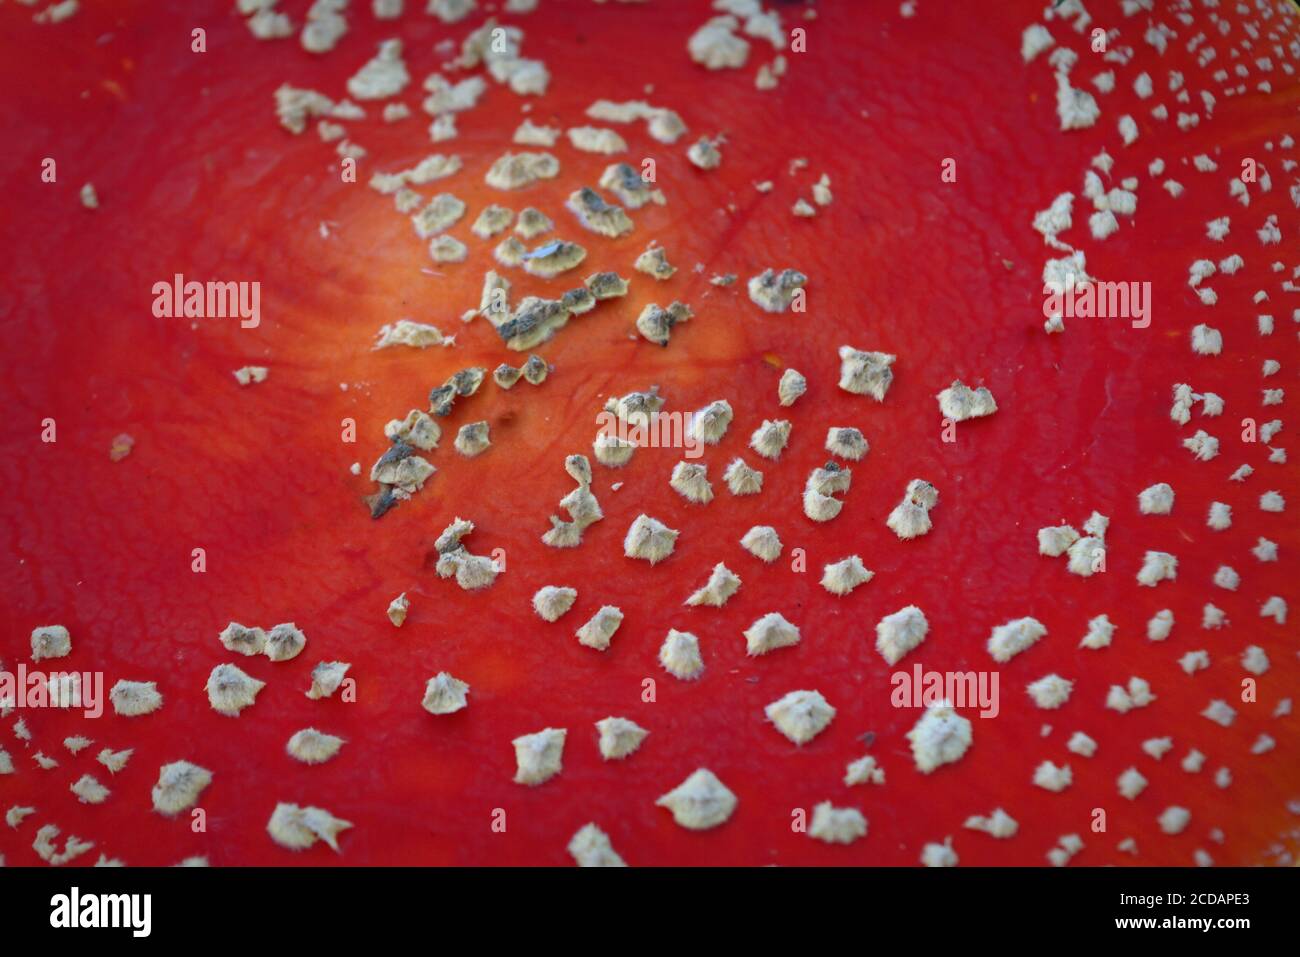 Nahaufnahme des roten Hutes des wilden giftigen Amanita Pilzes. Stockfoto